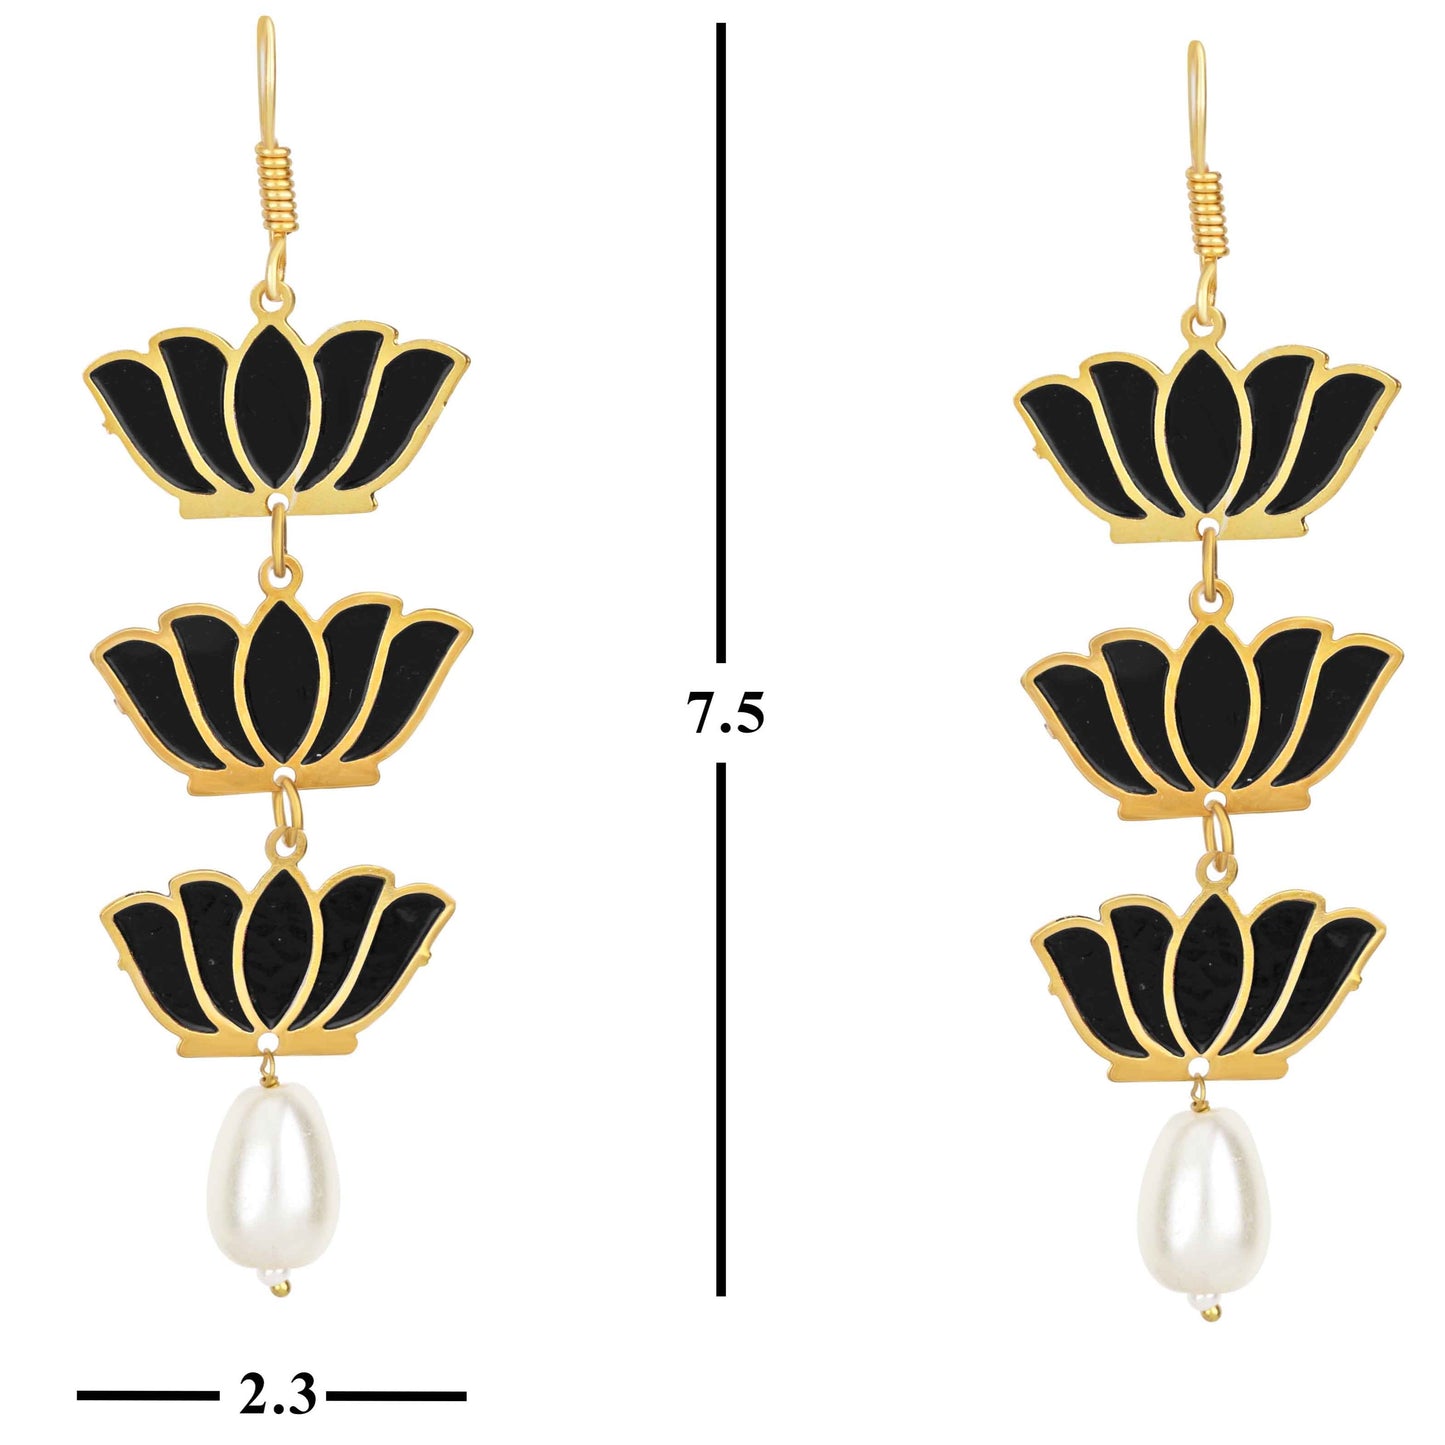 Bdiva 18K Gold Plated Light Weight Black Lotus Earrings.